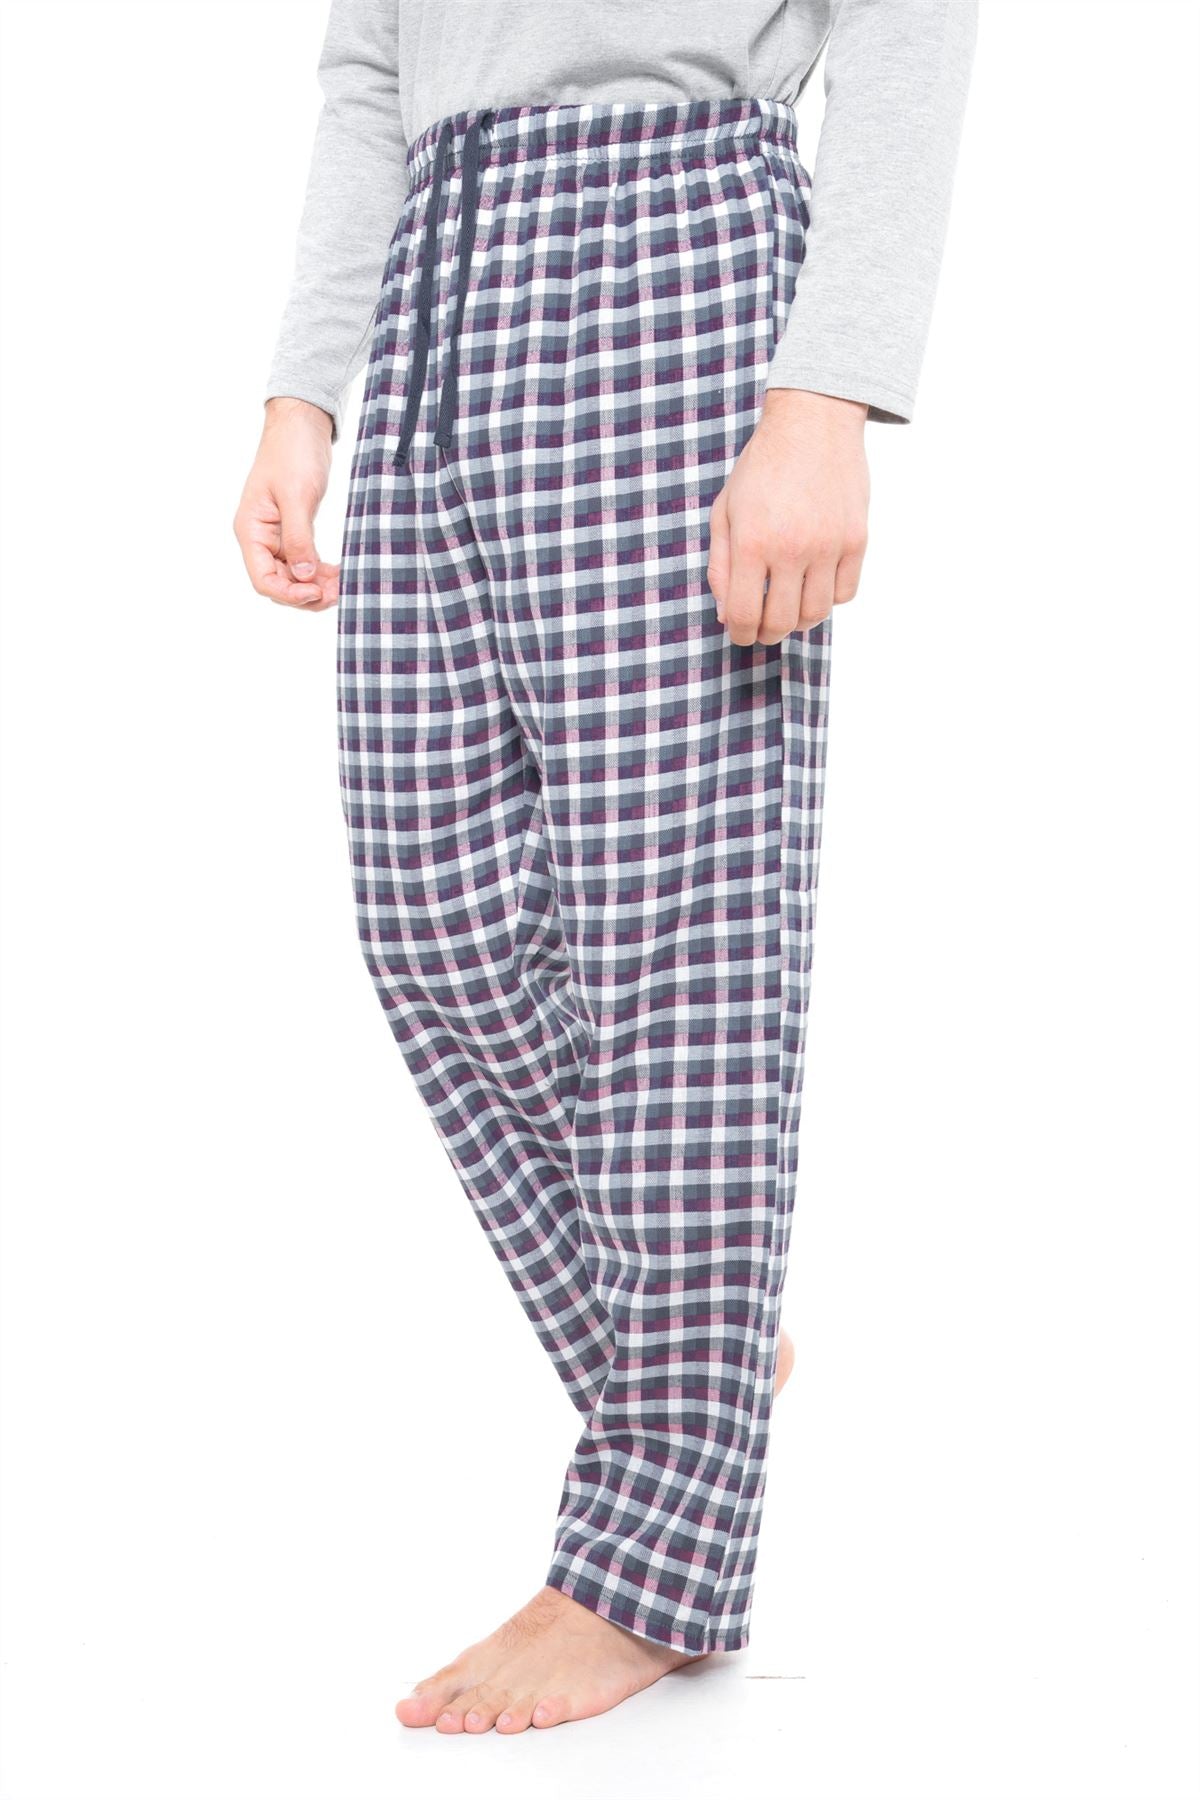 Grey Cotton Pyjama Set